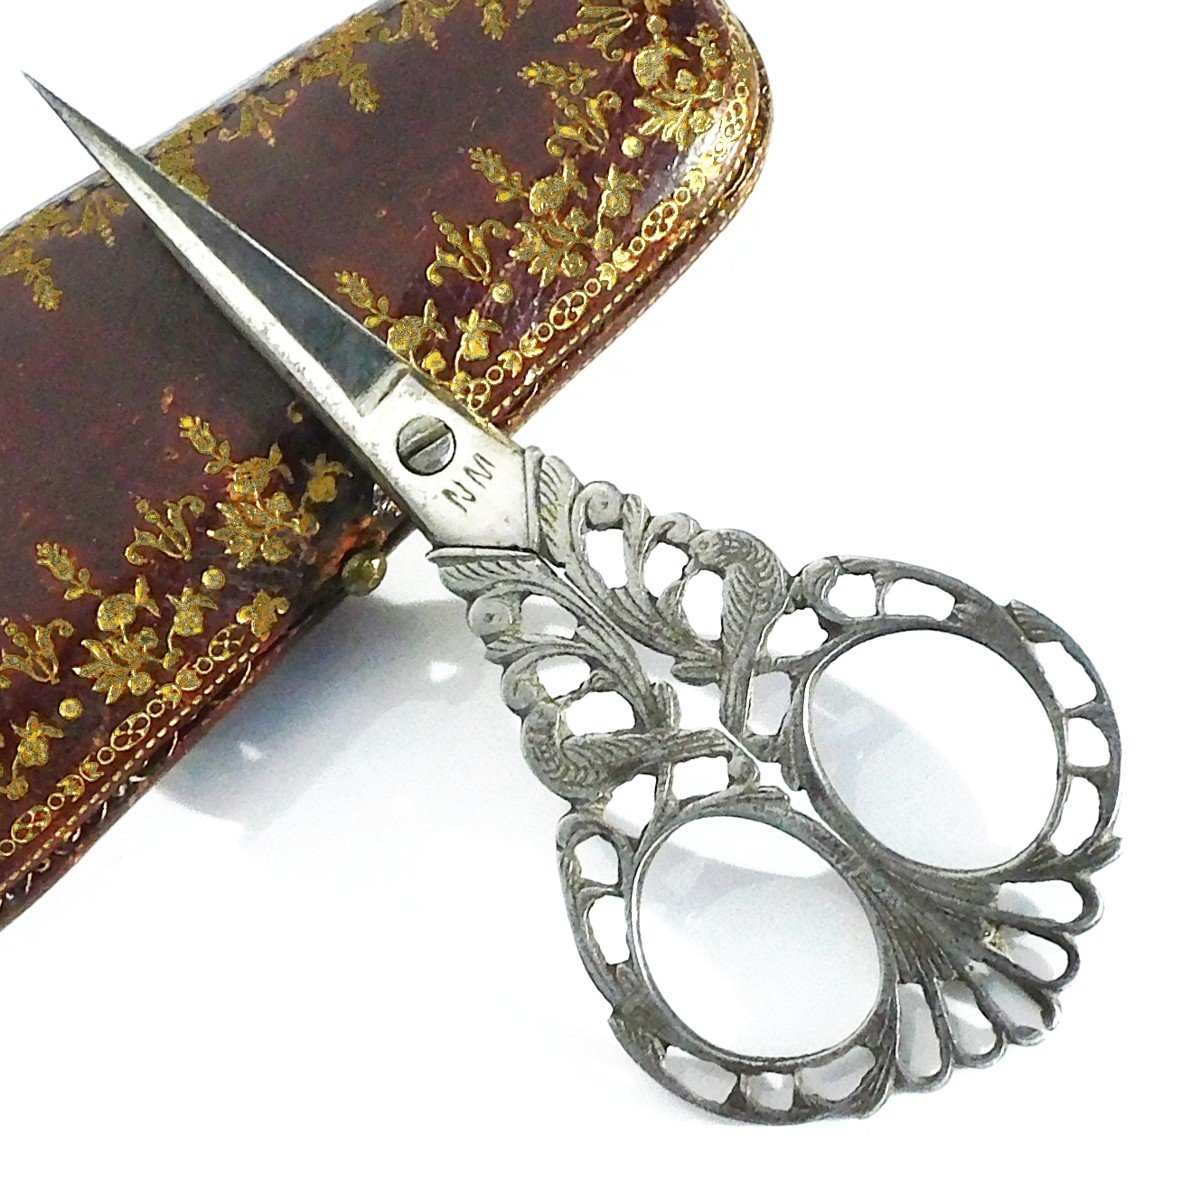 Italian Steel Lace Embroidery Scissors 19th Century